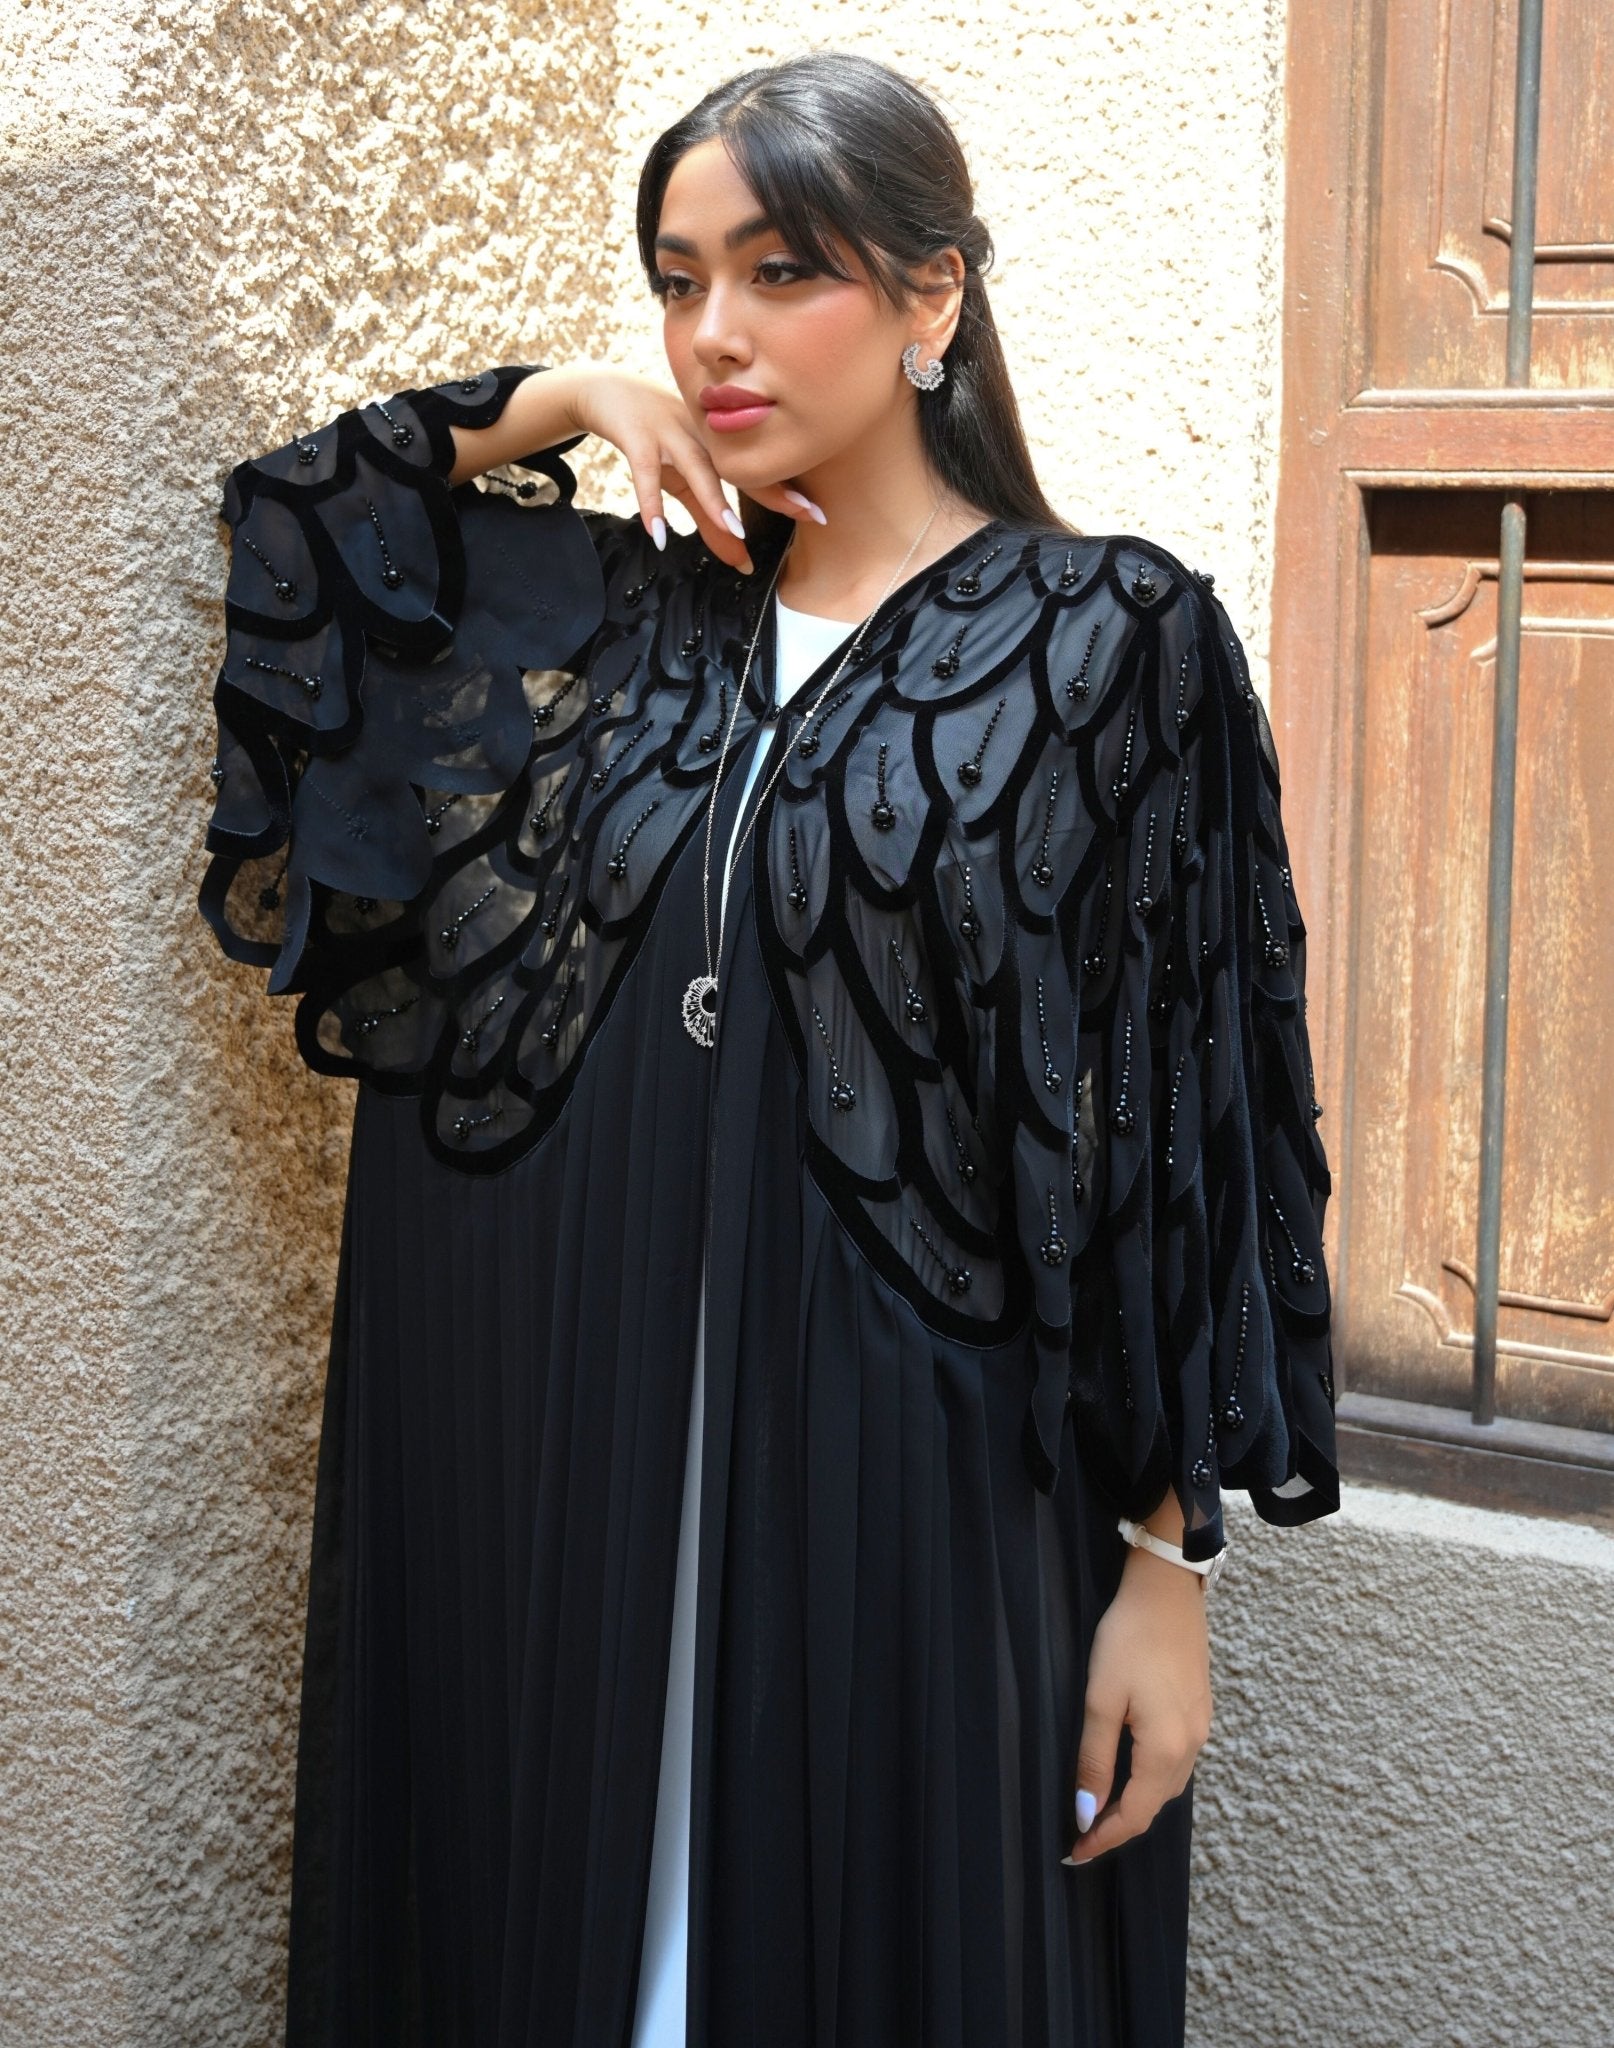 Butterfly wings Abaya - My Store